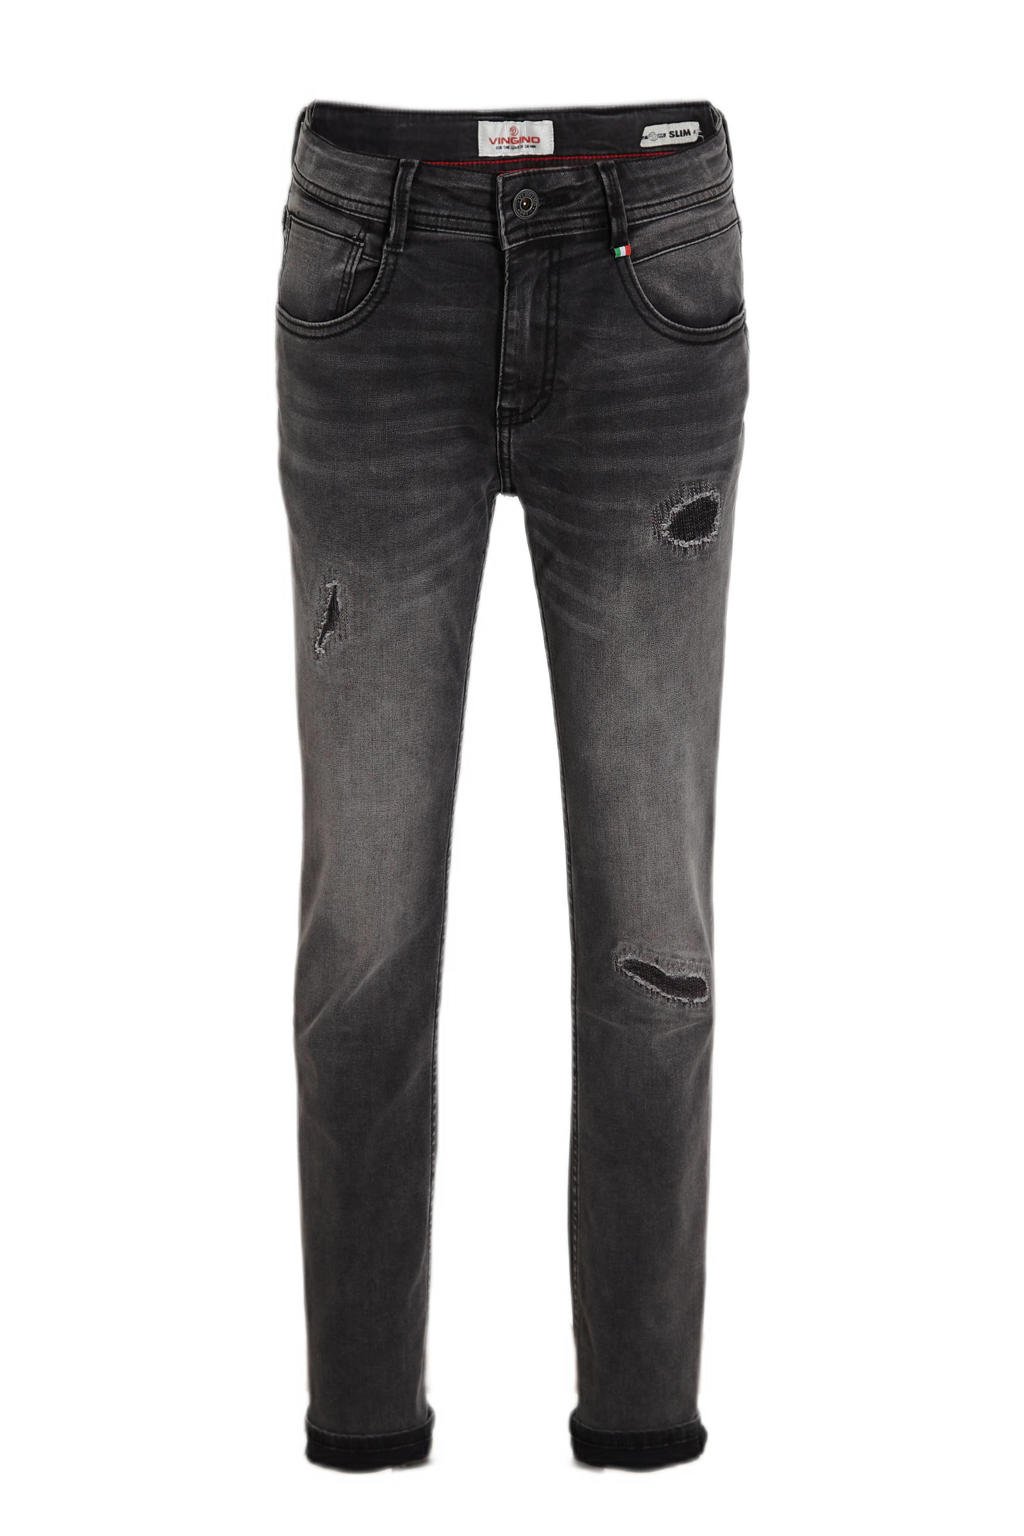 Grey denim jongens Vingino slim fit jeans Danny black van katoen met regular waist